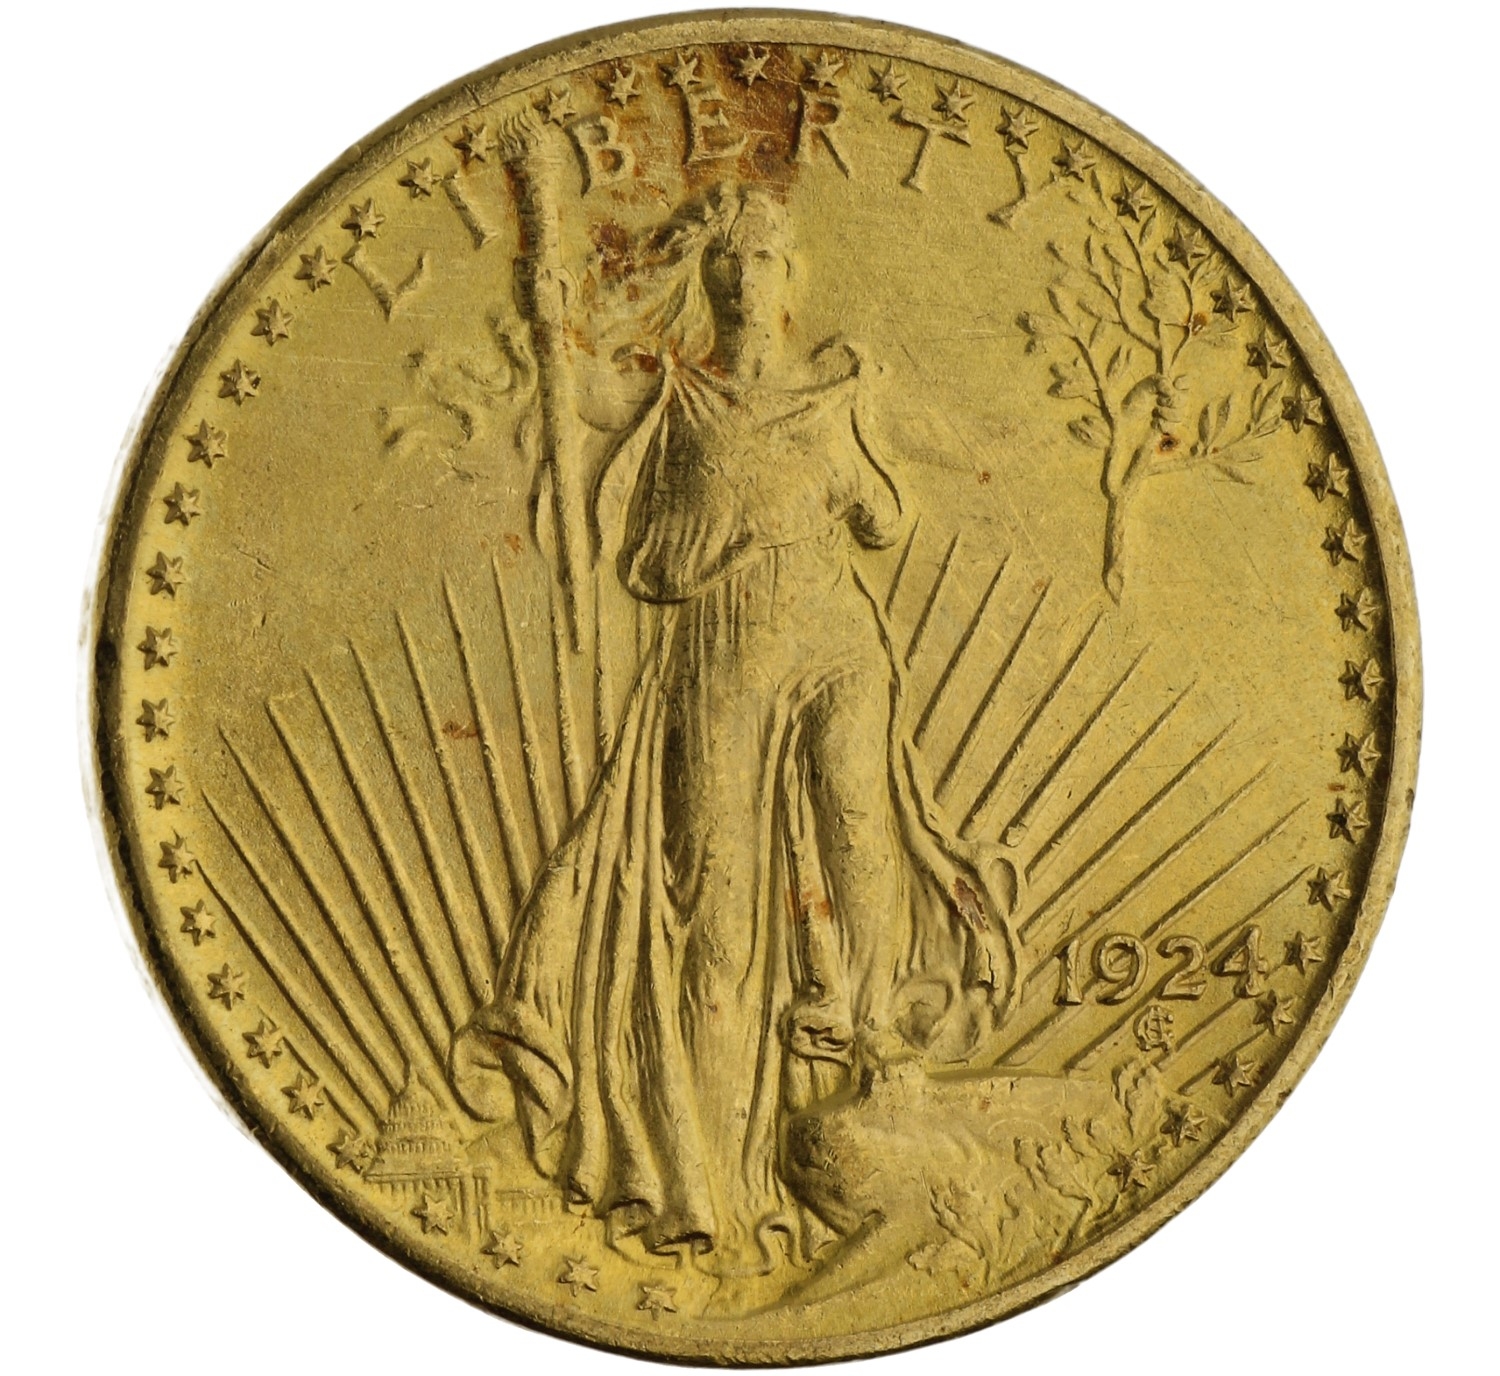 20 Dollars - USA - 1924